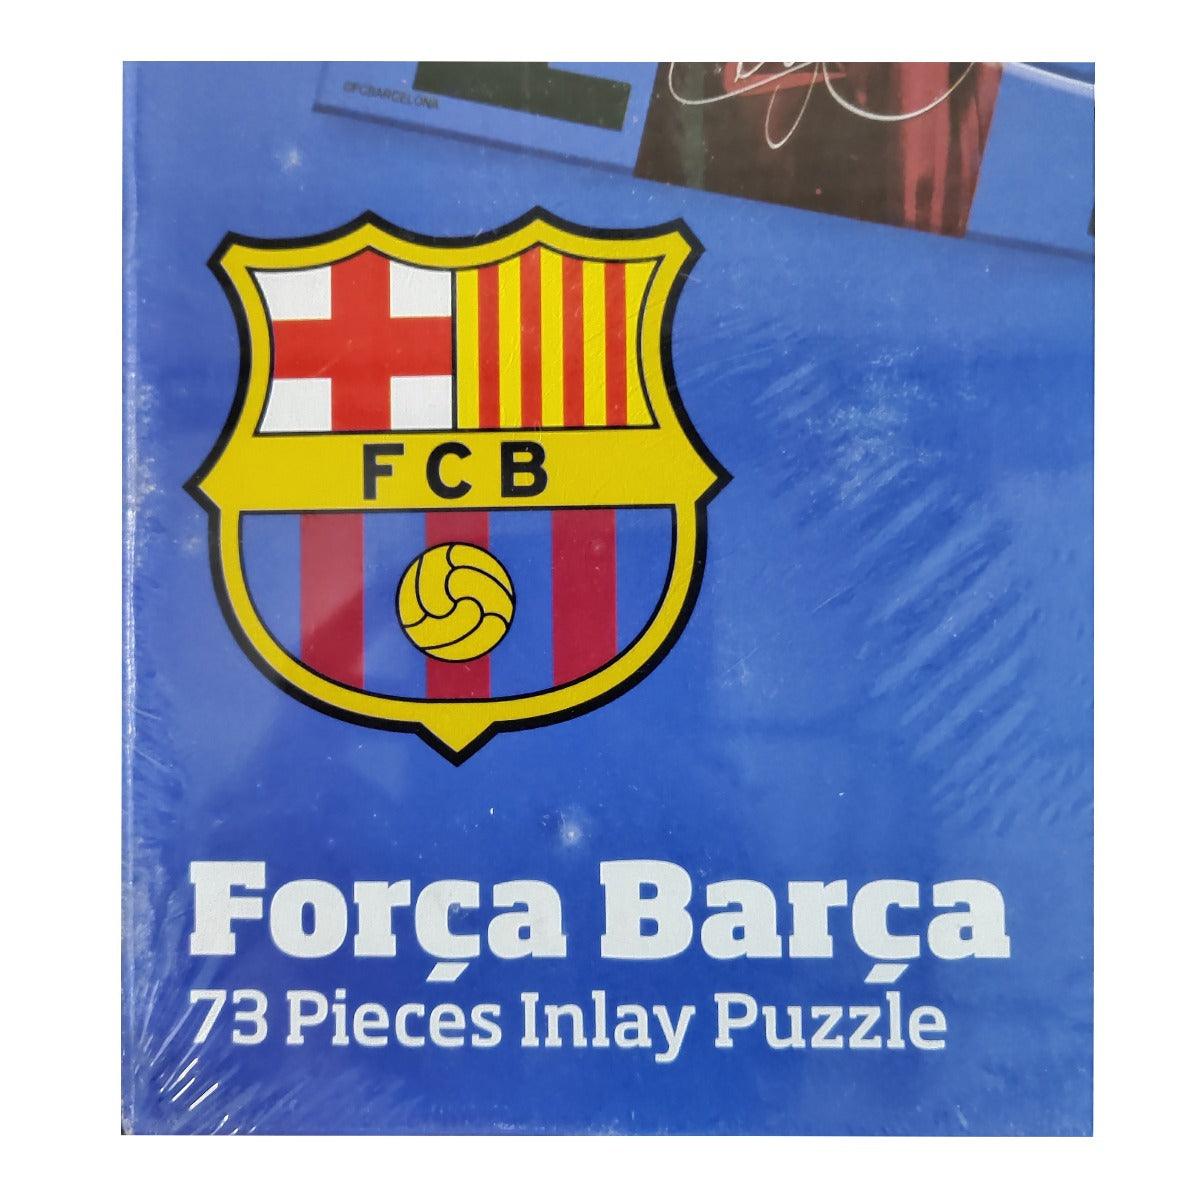 Funskool FCB Barcelona, Forca Barca 73 Pieces Inlay Puzzle